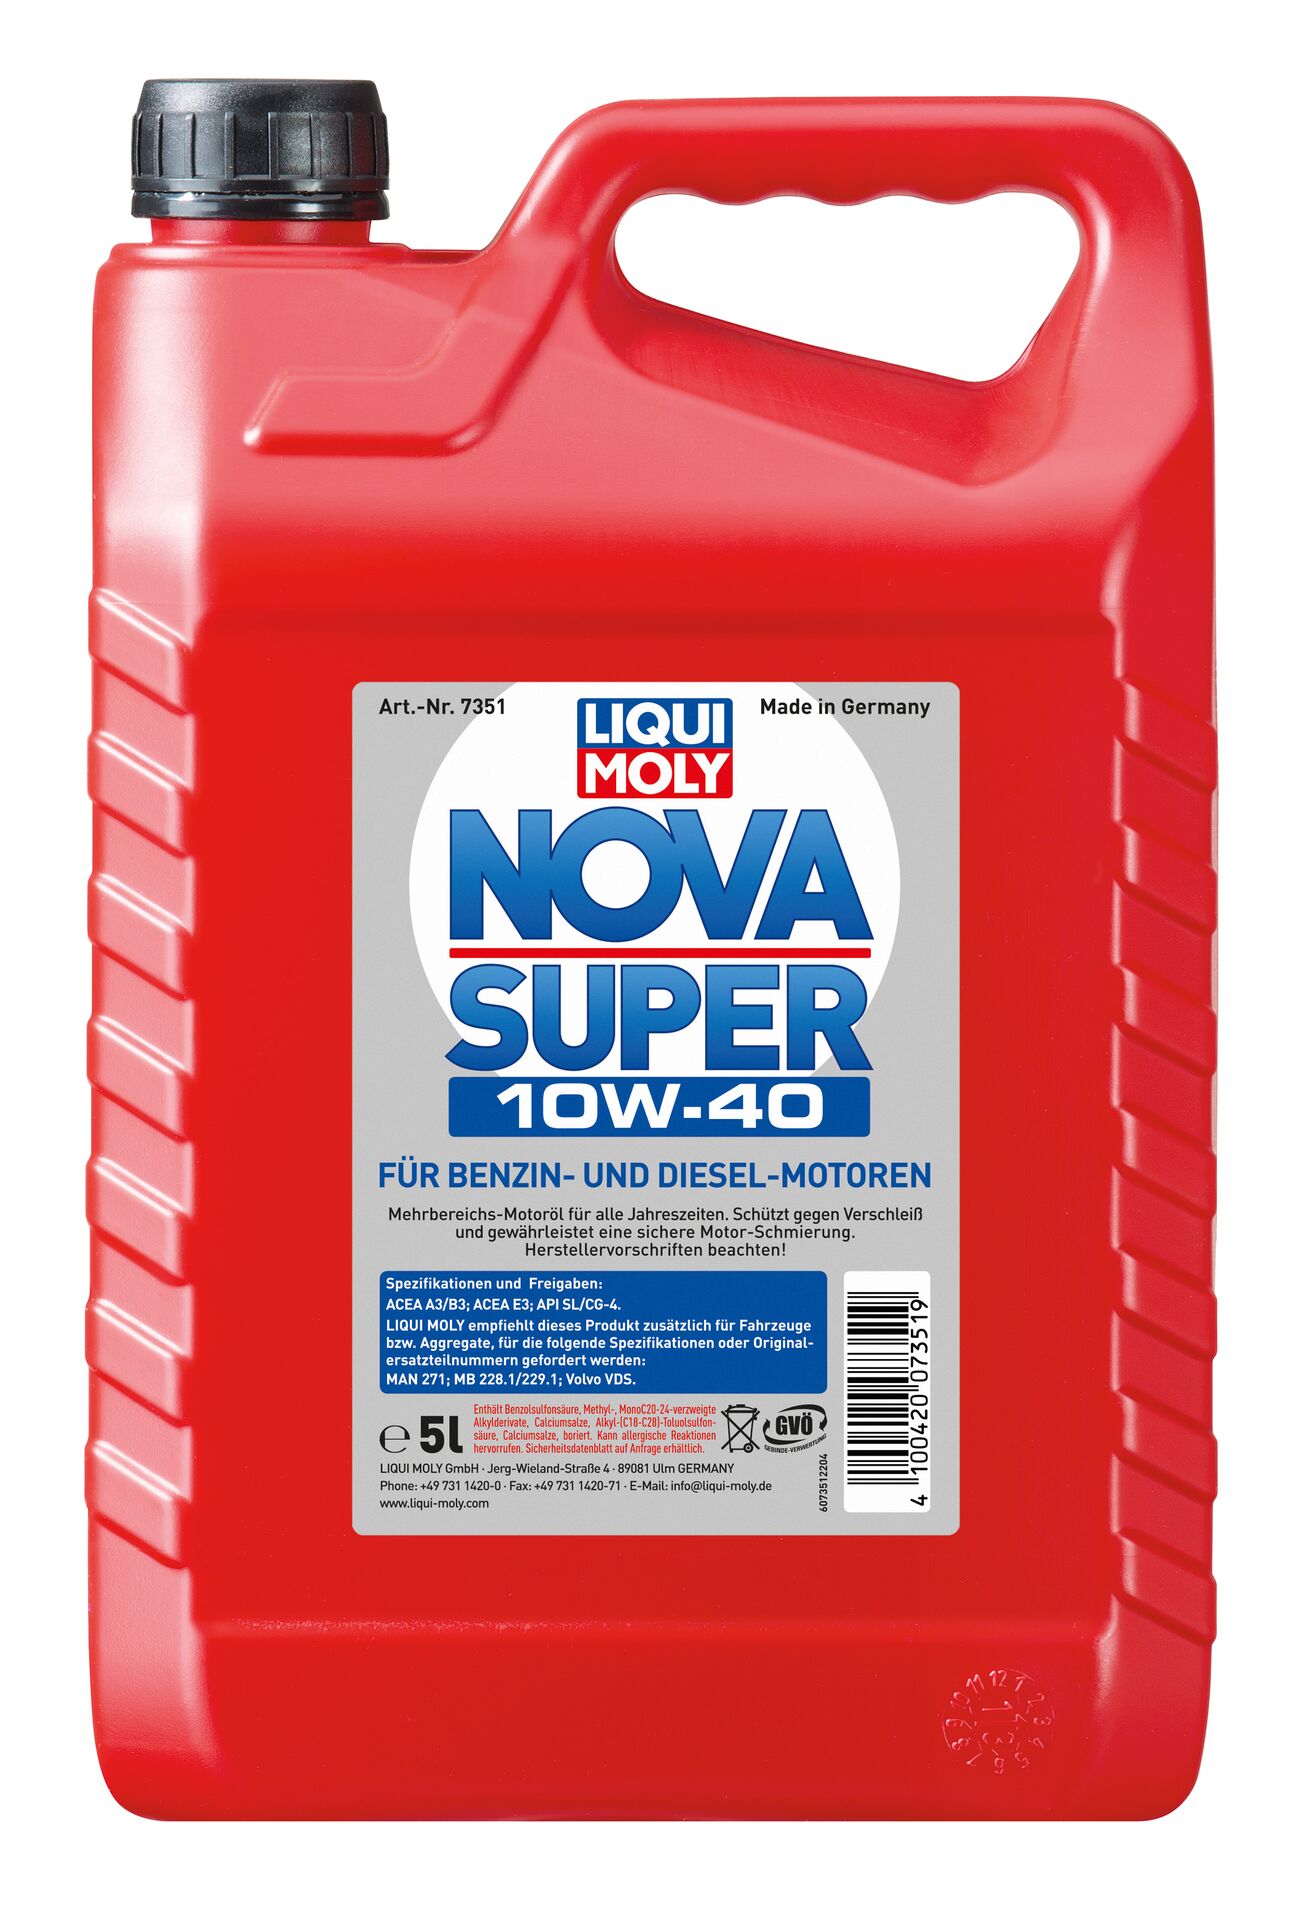  Liqui Moly 7351 1x5 Liter Nova Super 10W-40 Öl Motoröl